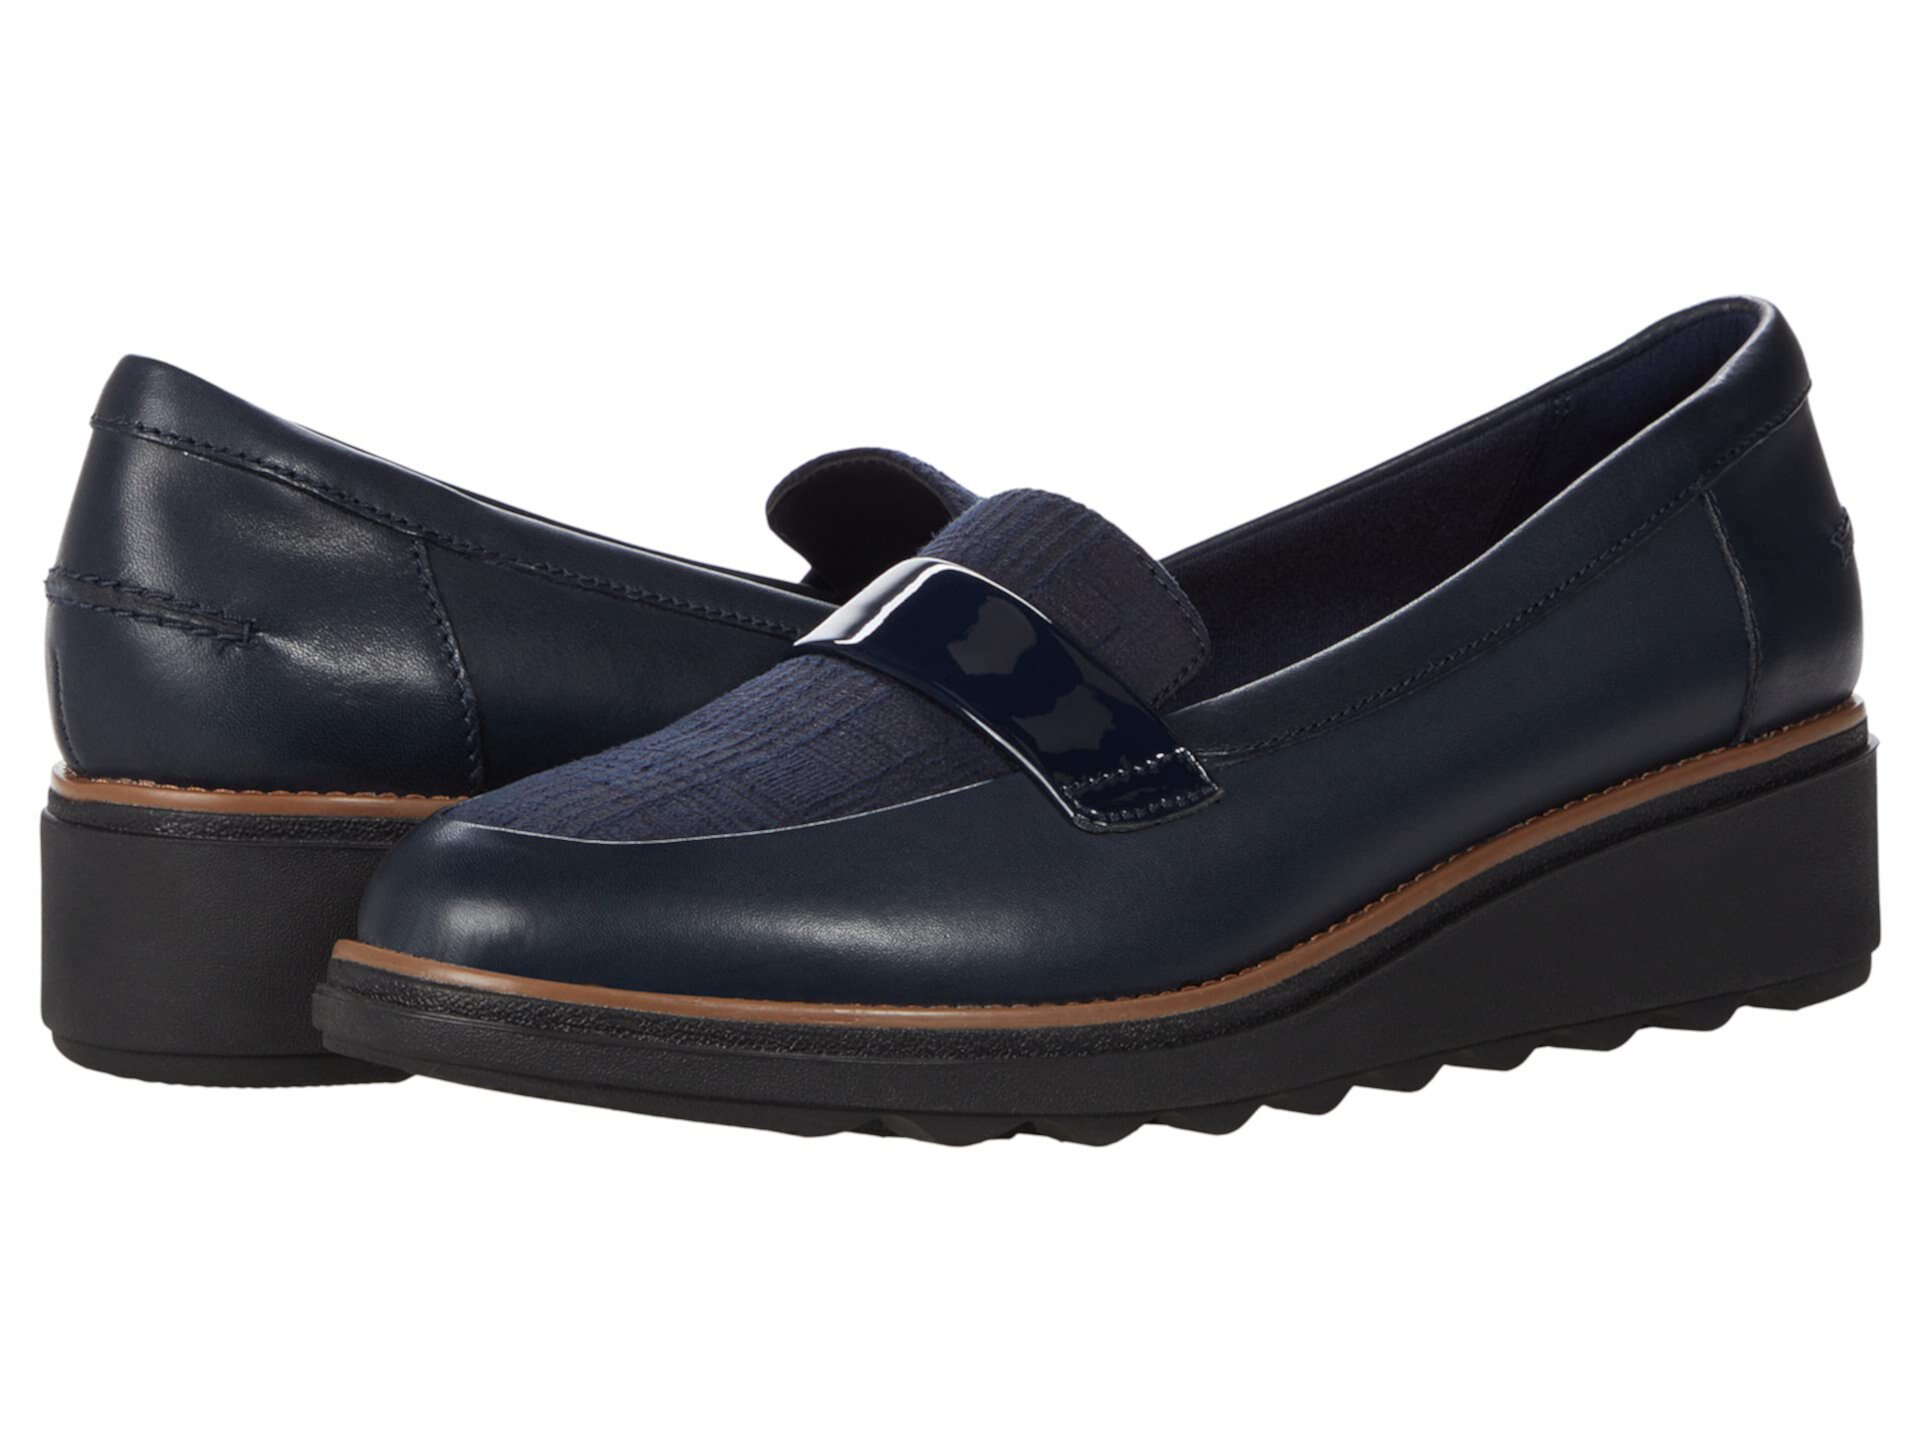 Обувь тенденс купить. Clarks Style # 26162926. Tendence бренд обуви. Тенденс обувь купить.